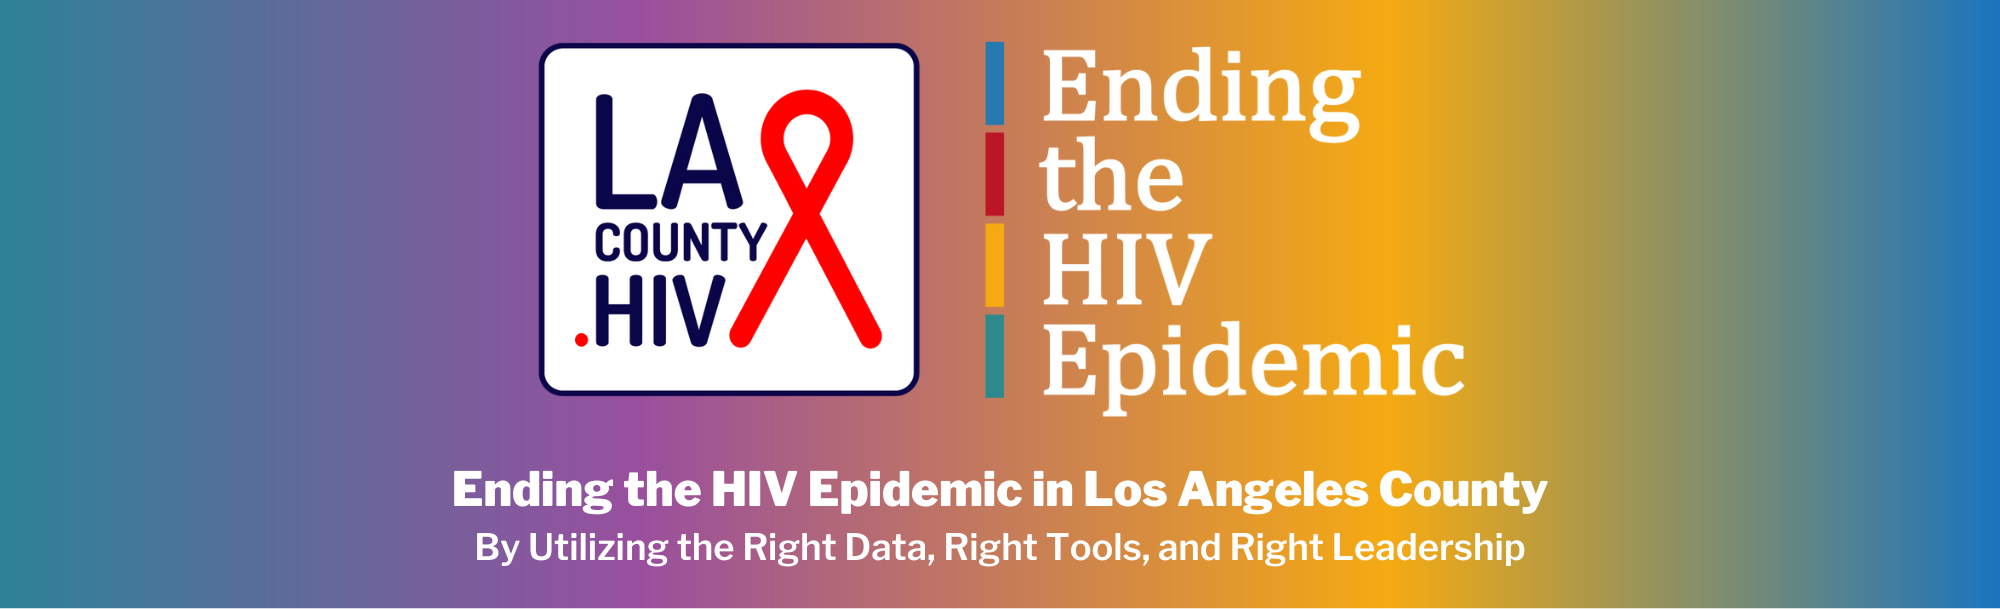 LAC HIV-AIDS Strategy